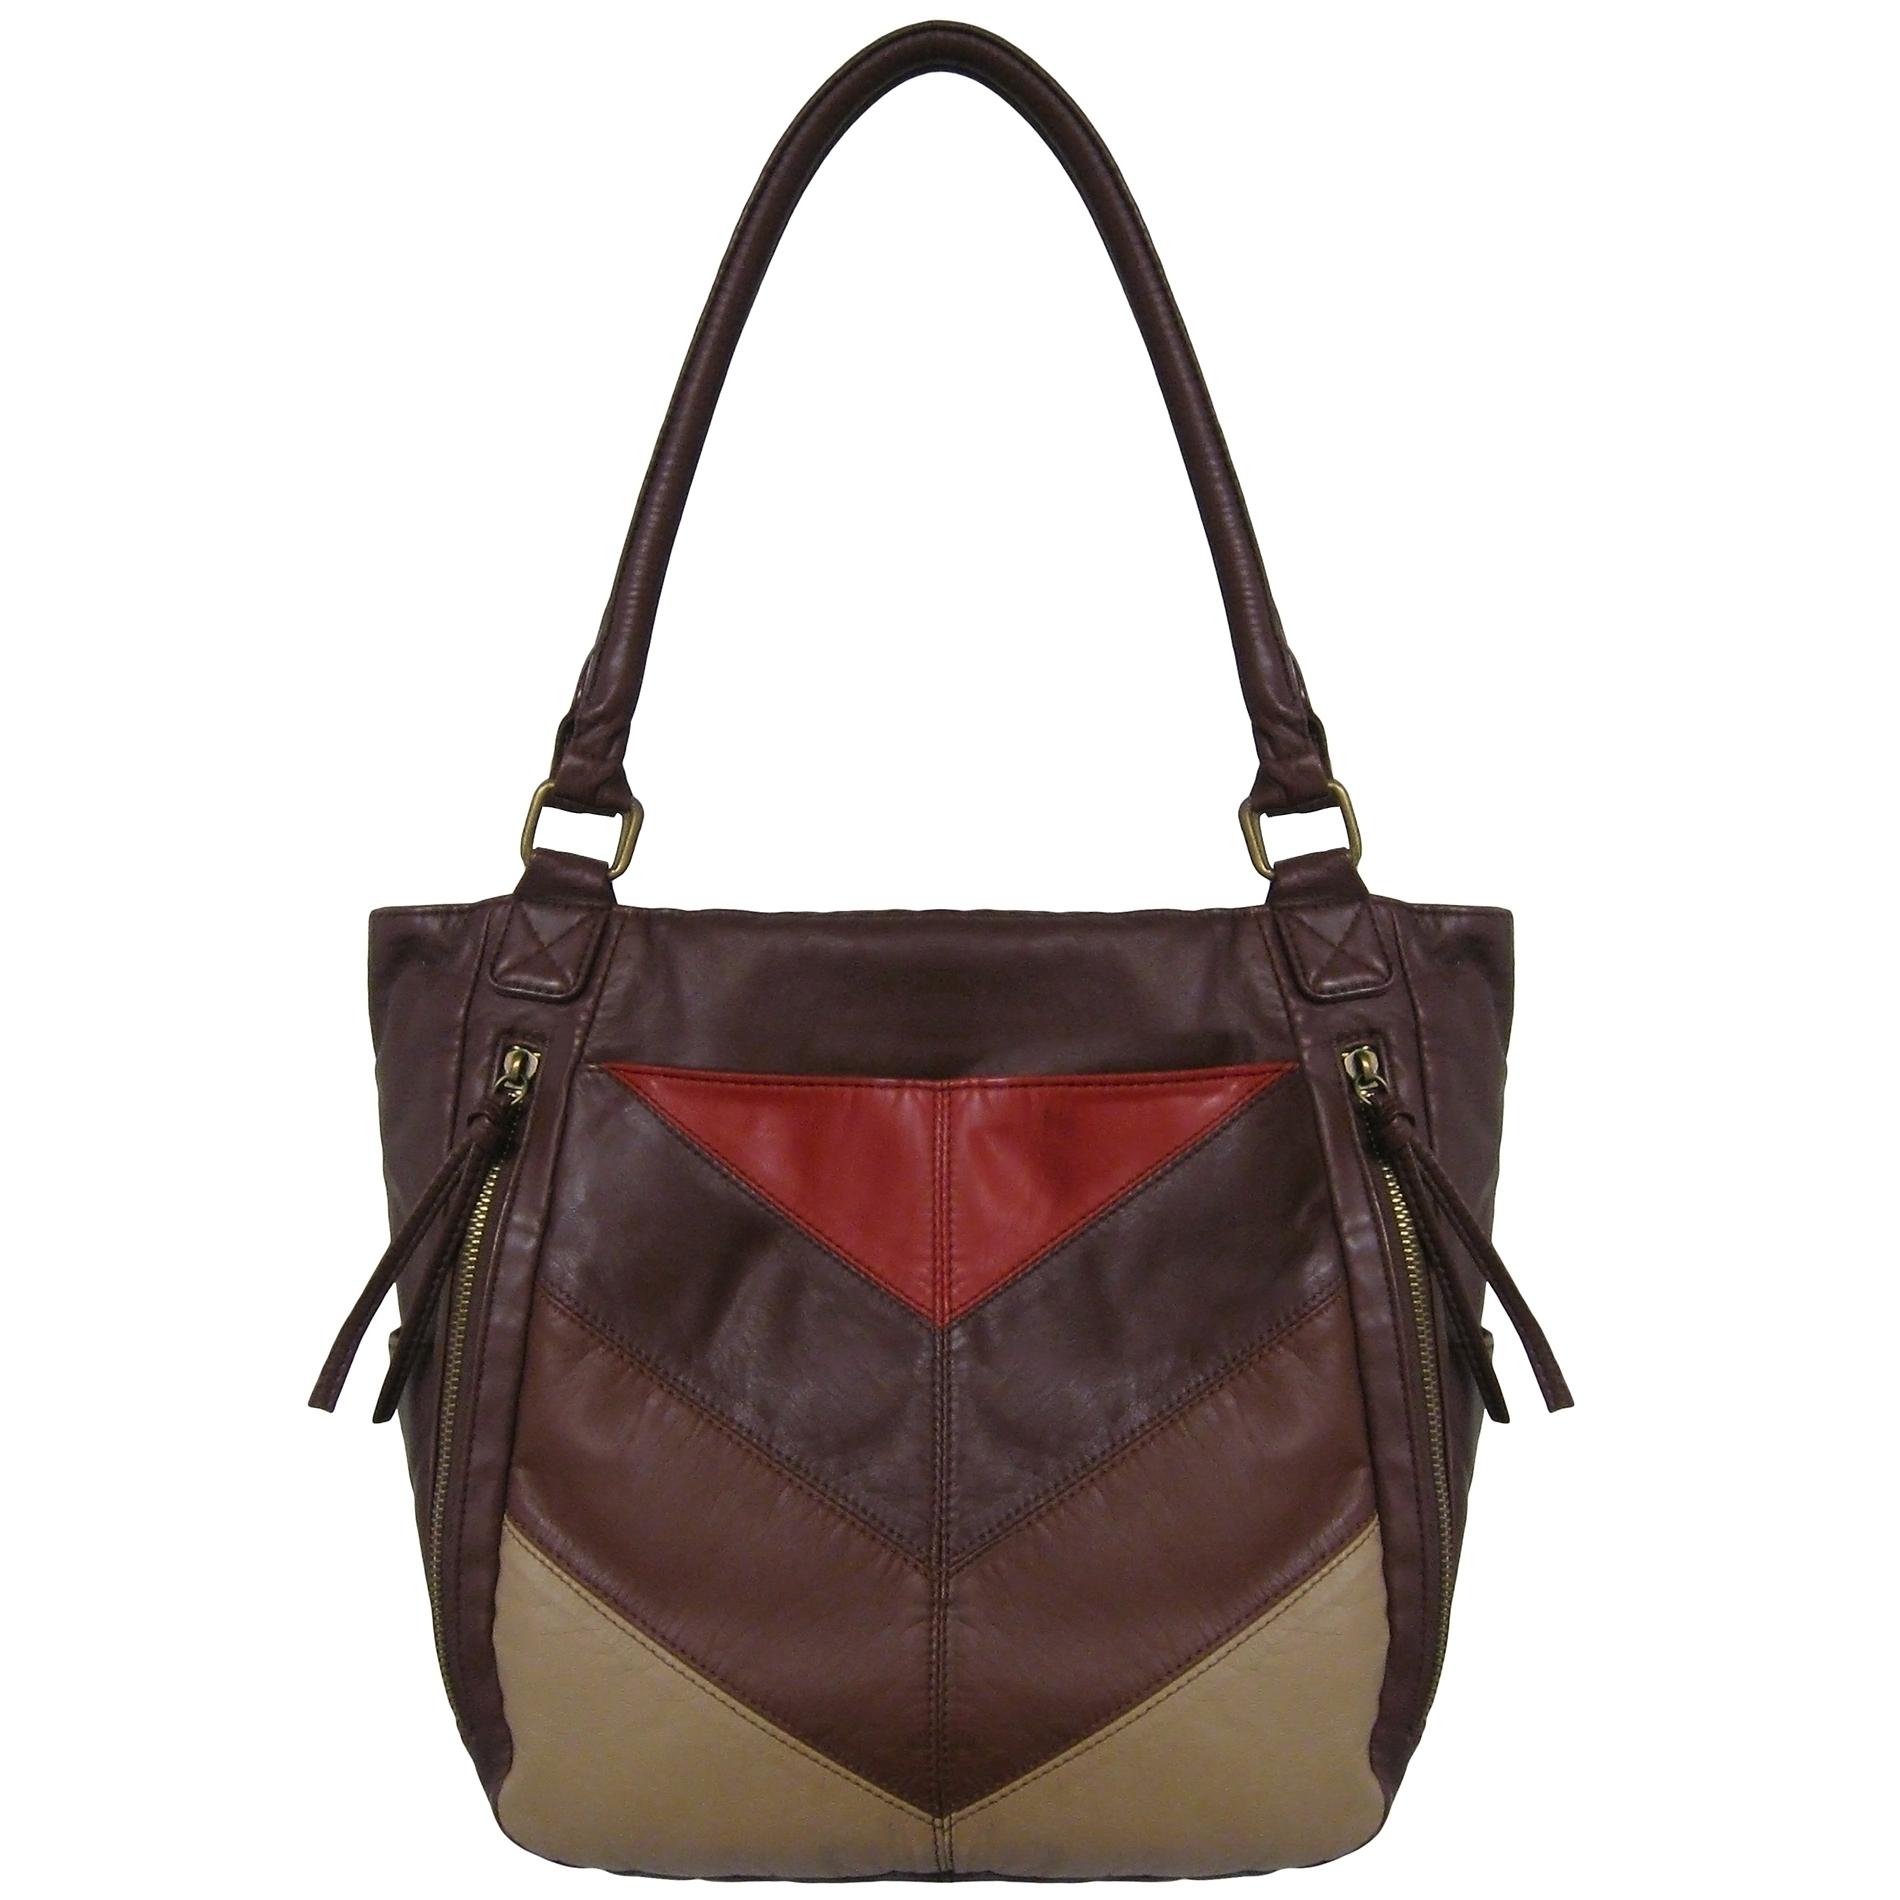 Covington Women's Faux Leather Tote Handbag - Chevron